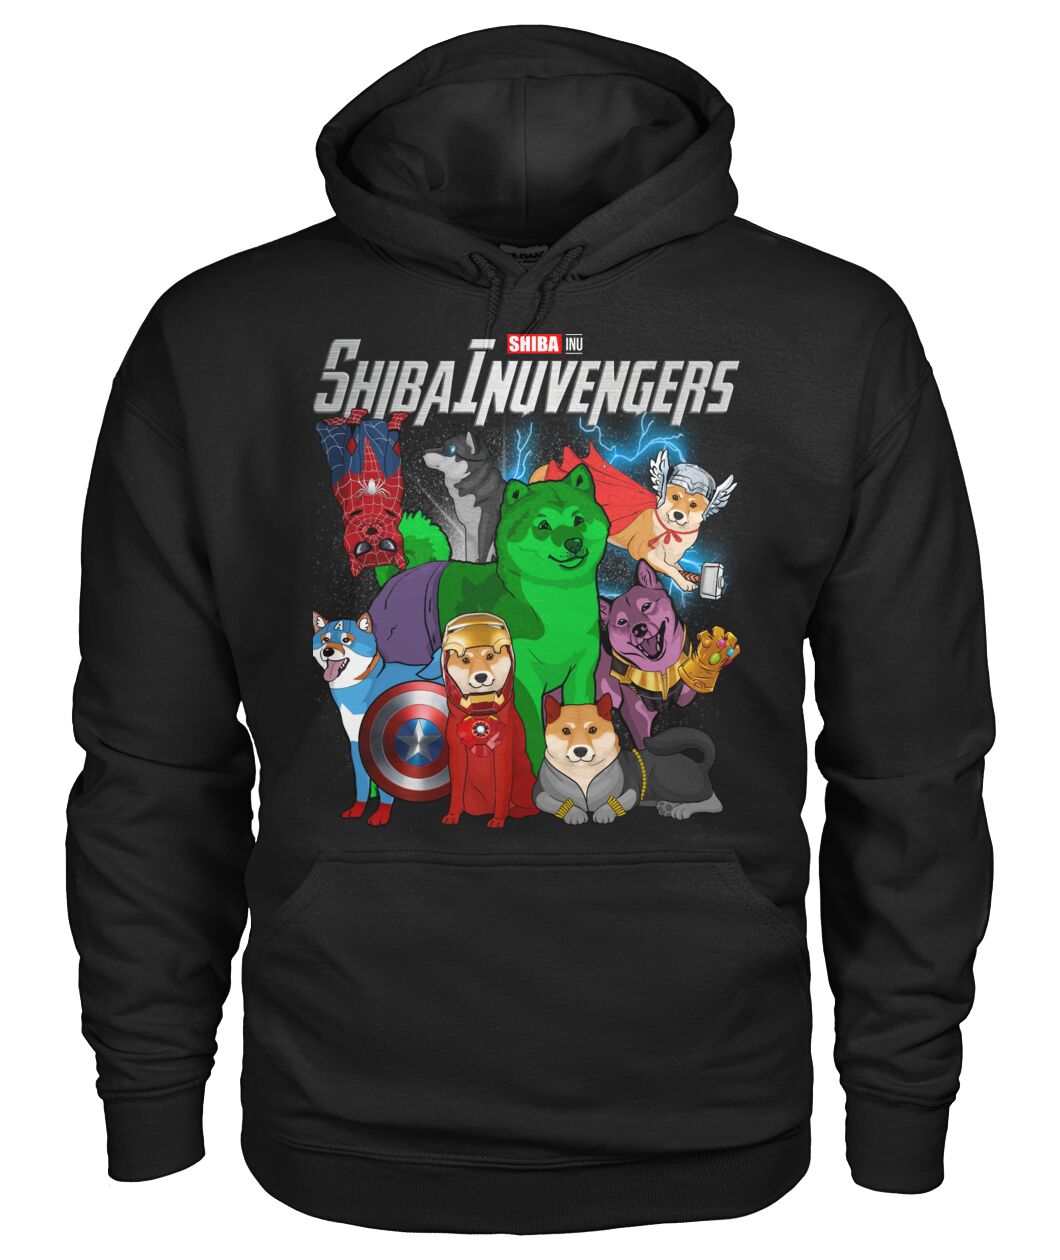 Shiba Inuvengers 3D Hoodie, Shirt 8